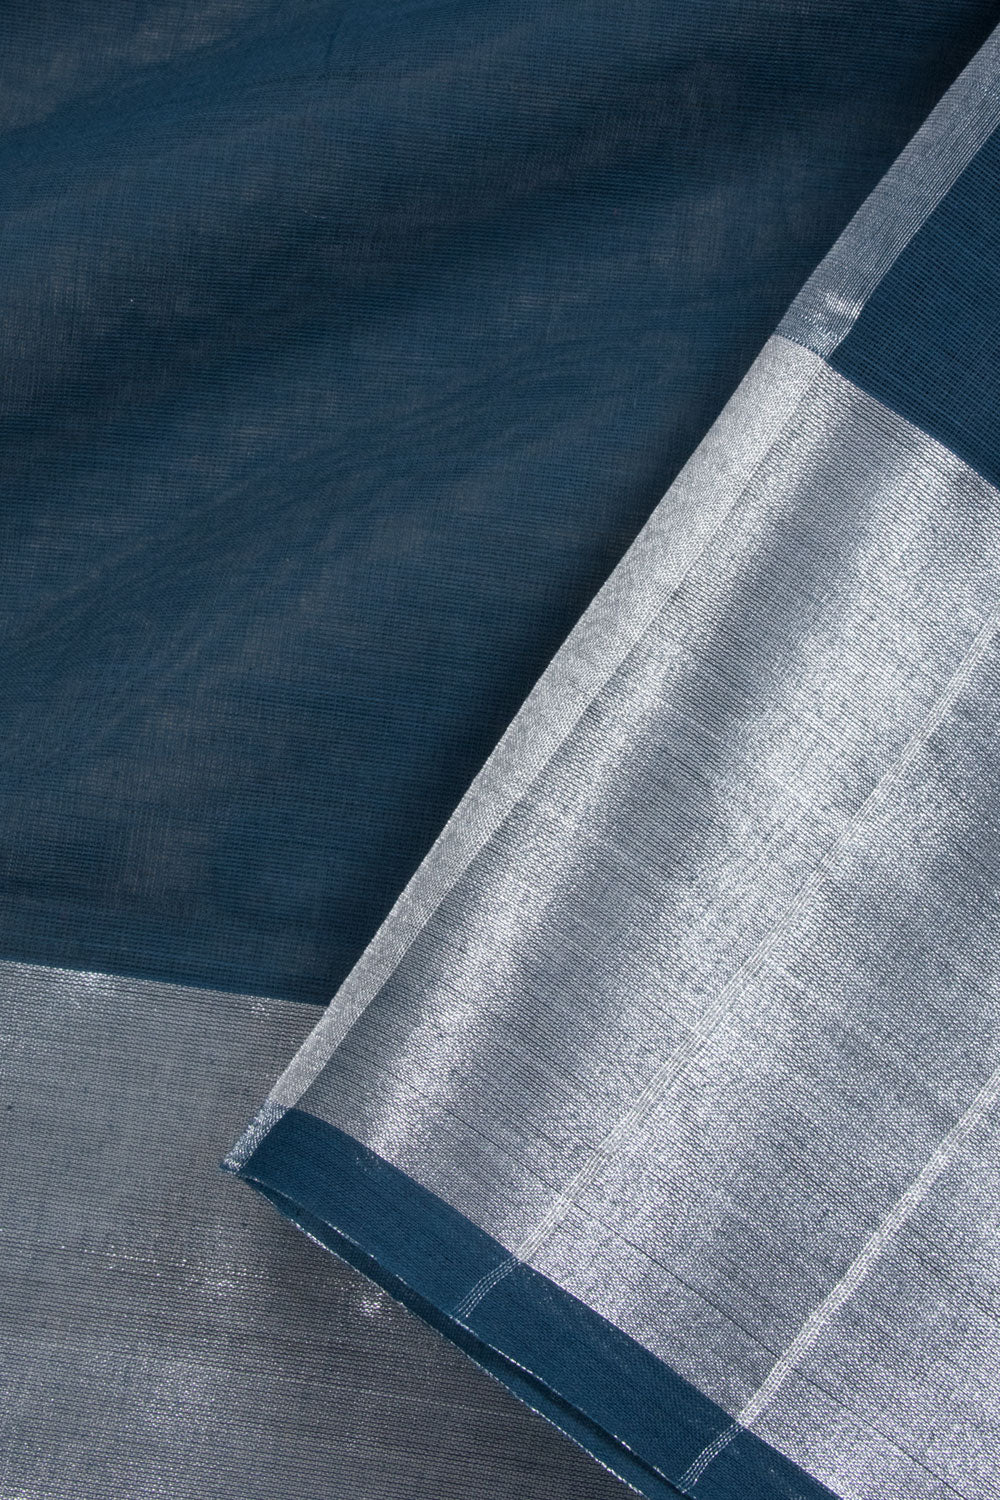 Teal Blue Handwoven Solapur Cotton Saree 10060209